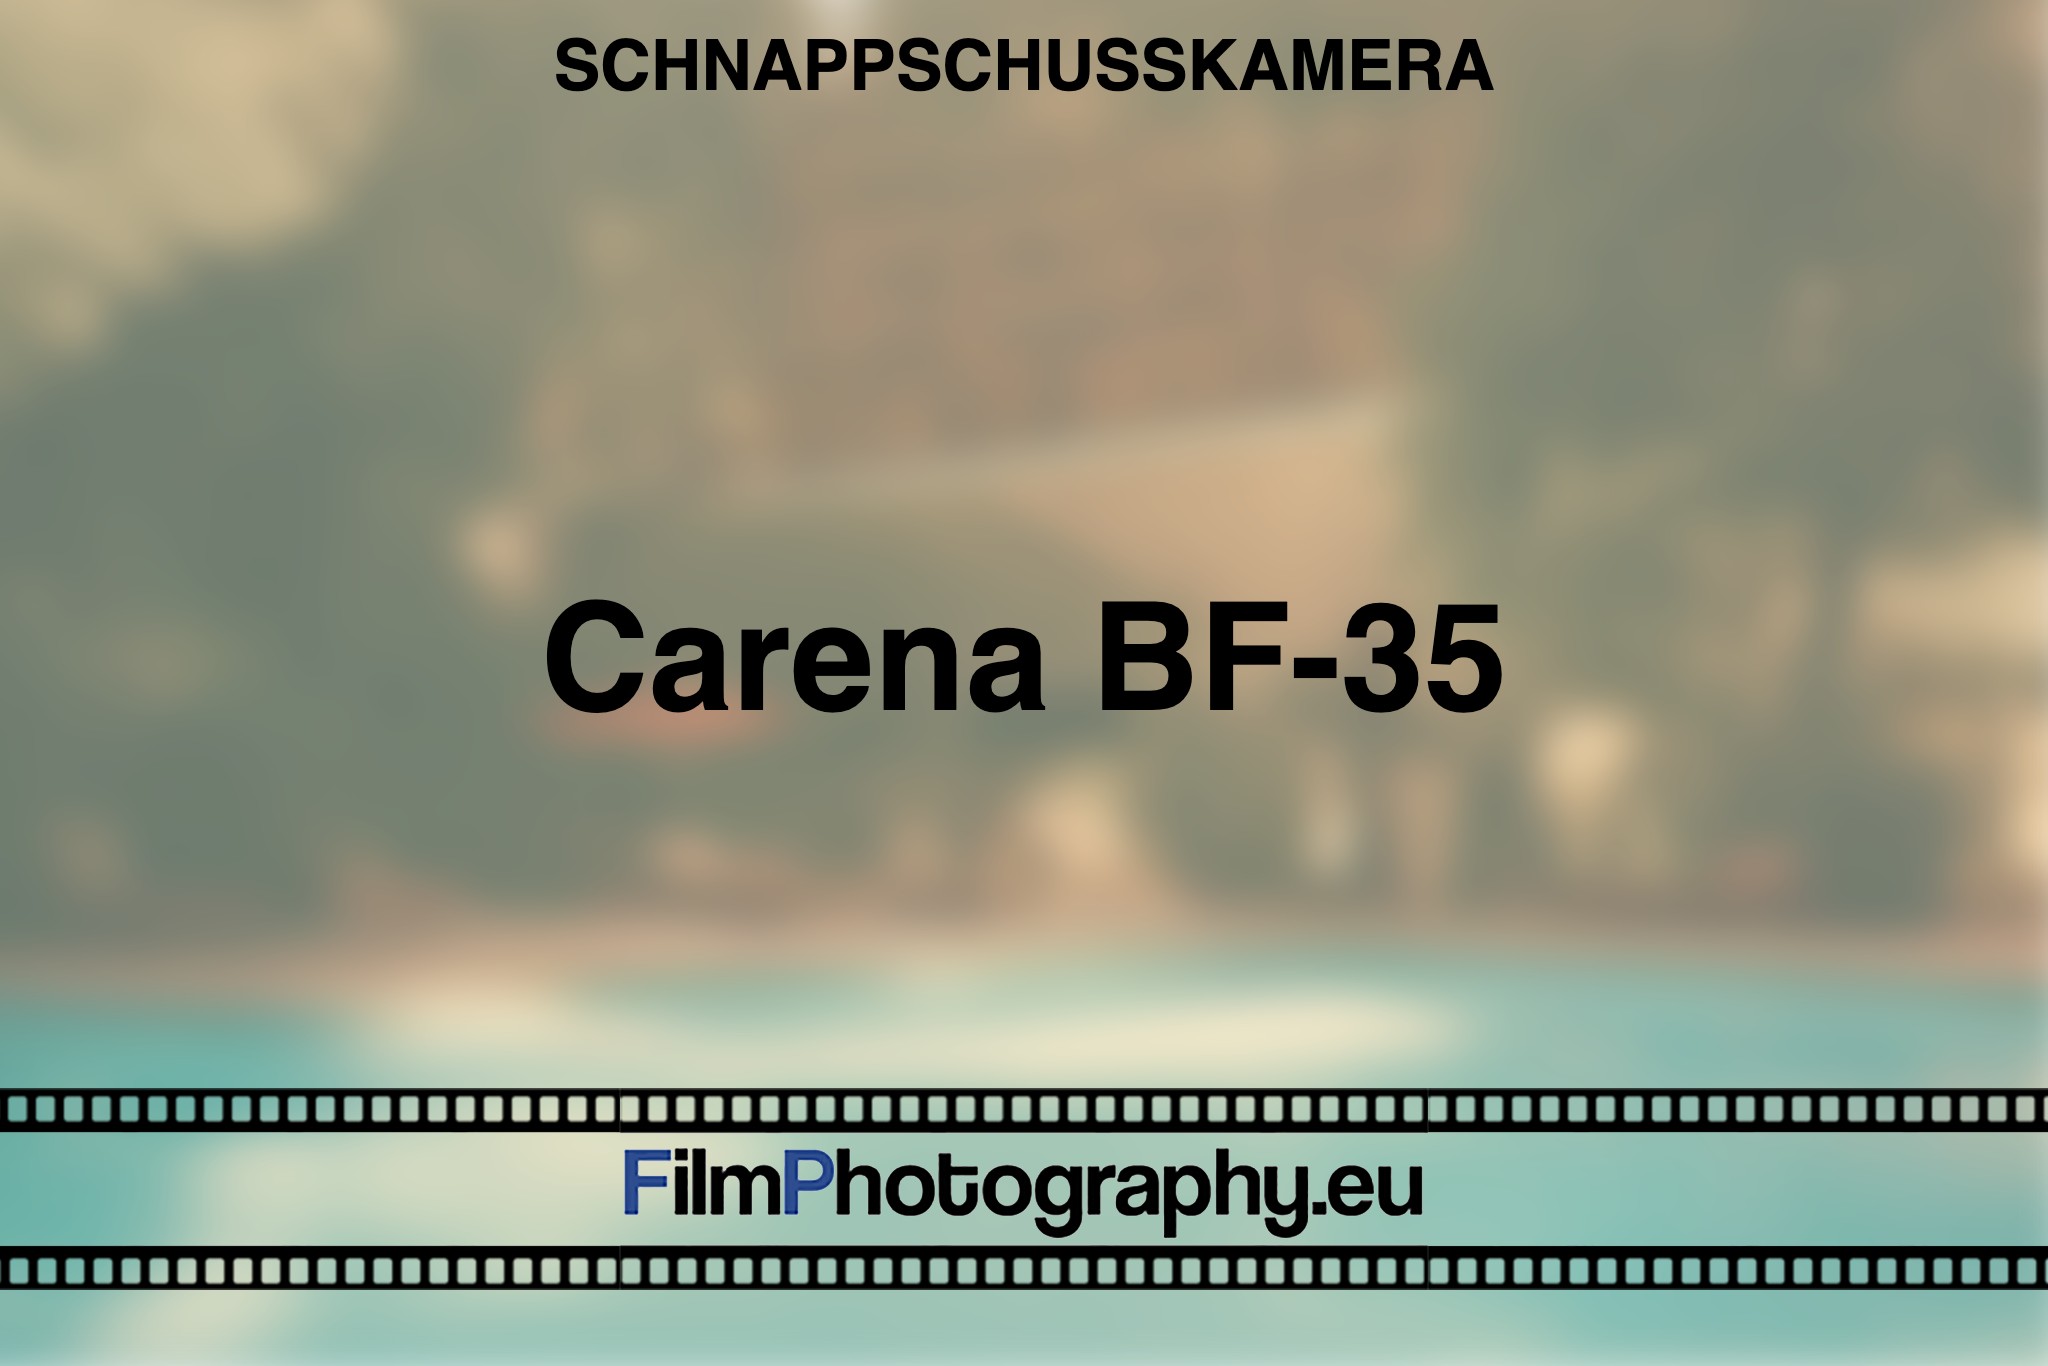 carena-bf-35-schnappschusskamera-bnv